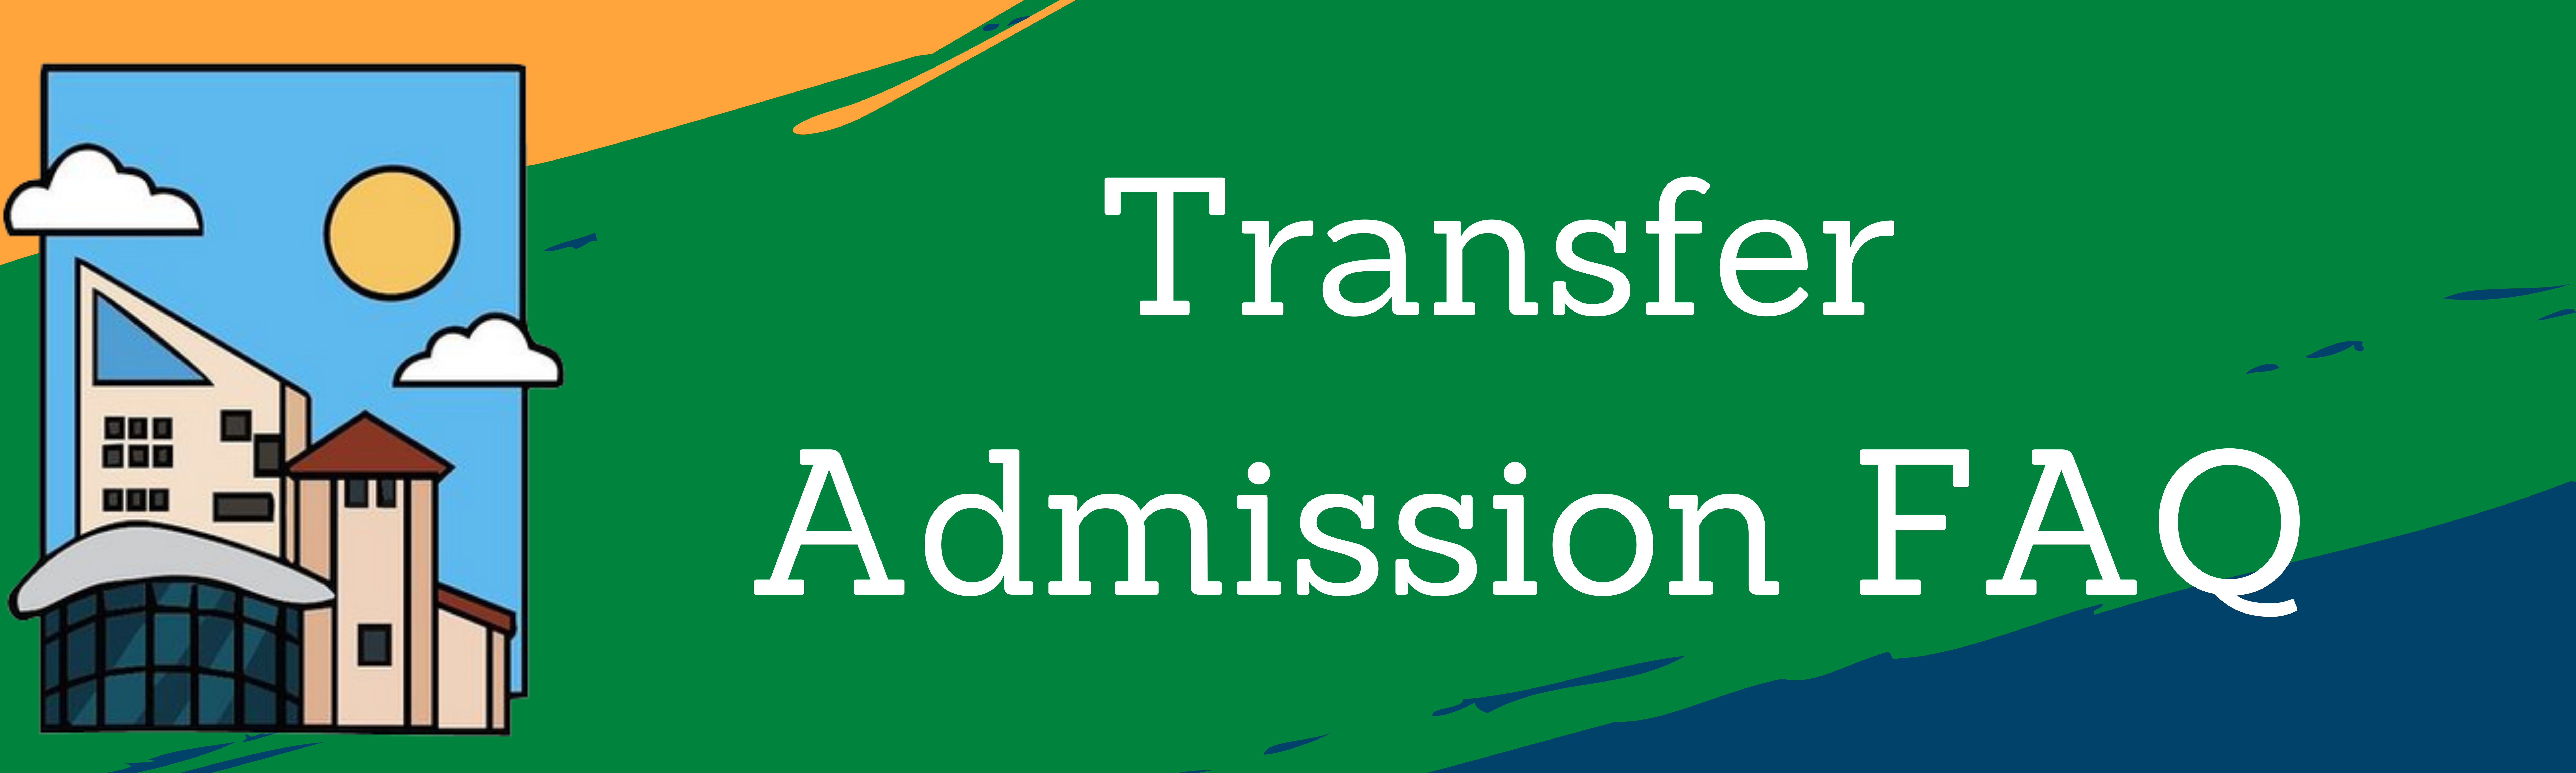 transfer admission faq